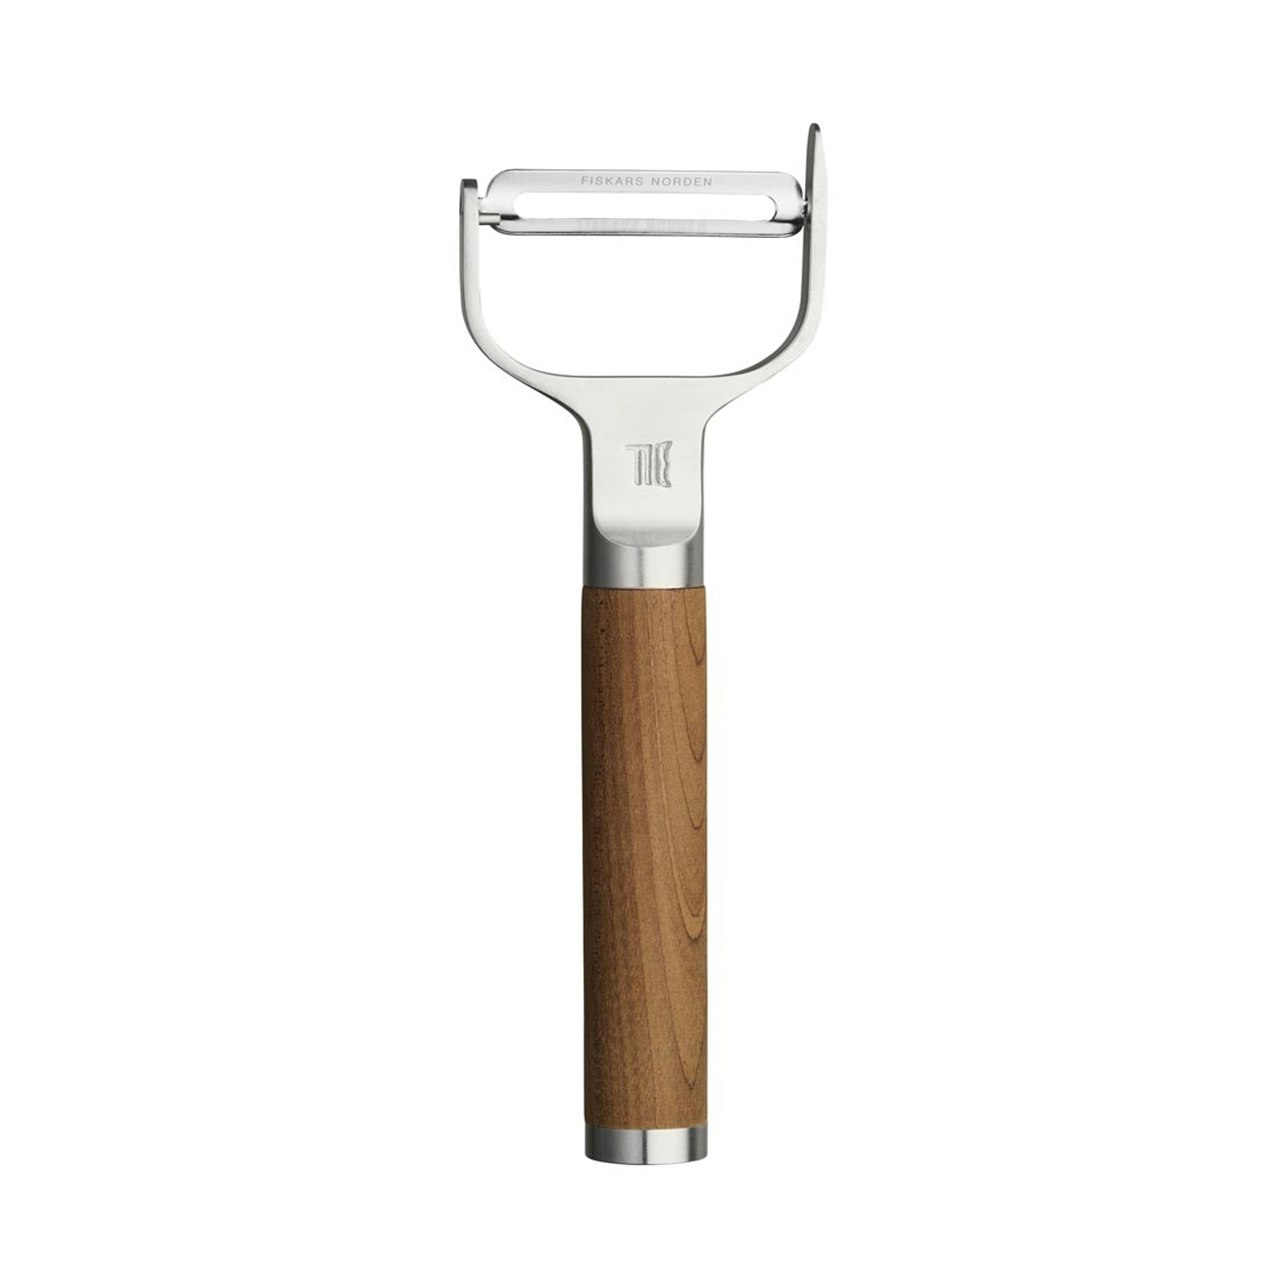 https://royaldesign.de/image/7/fiskars-norden-potato-peeler-with-movable-blade-0?w=800&quality=80